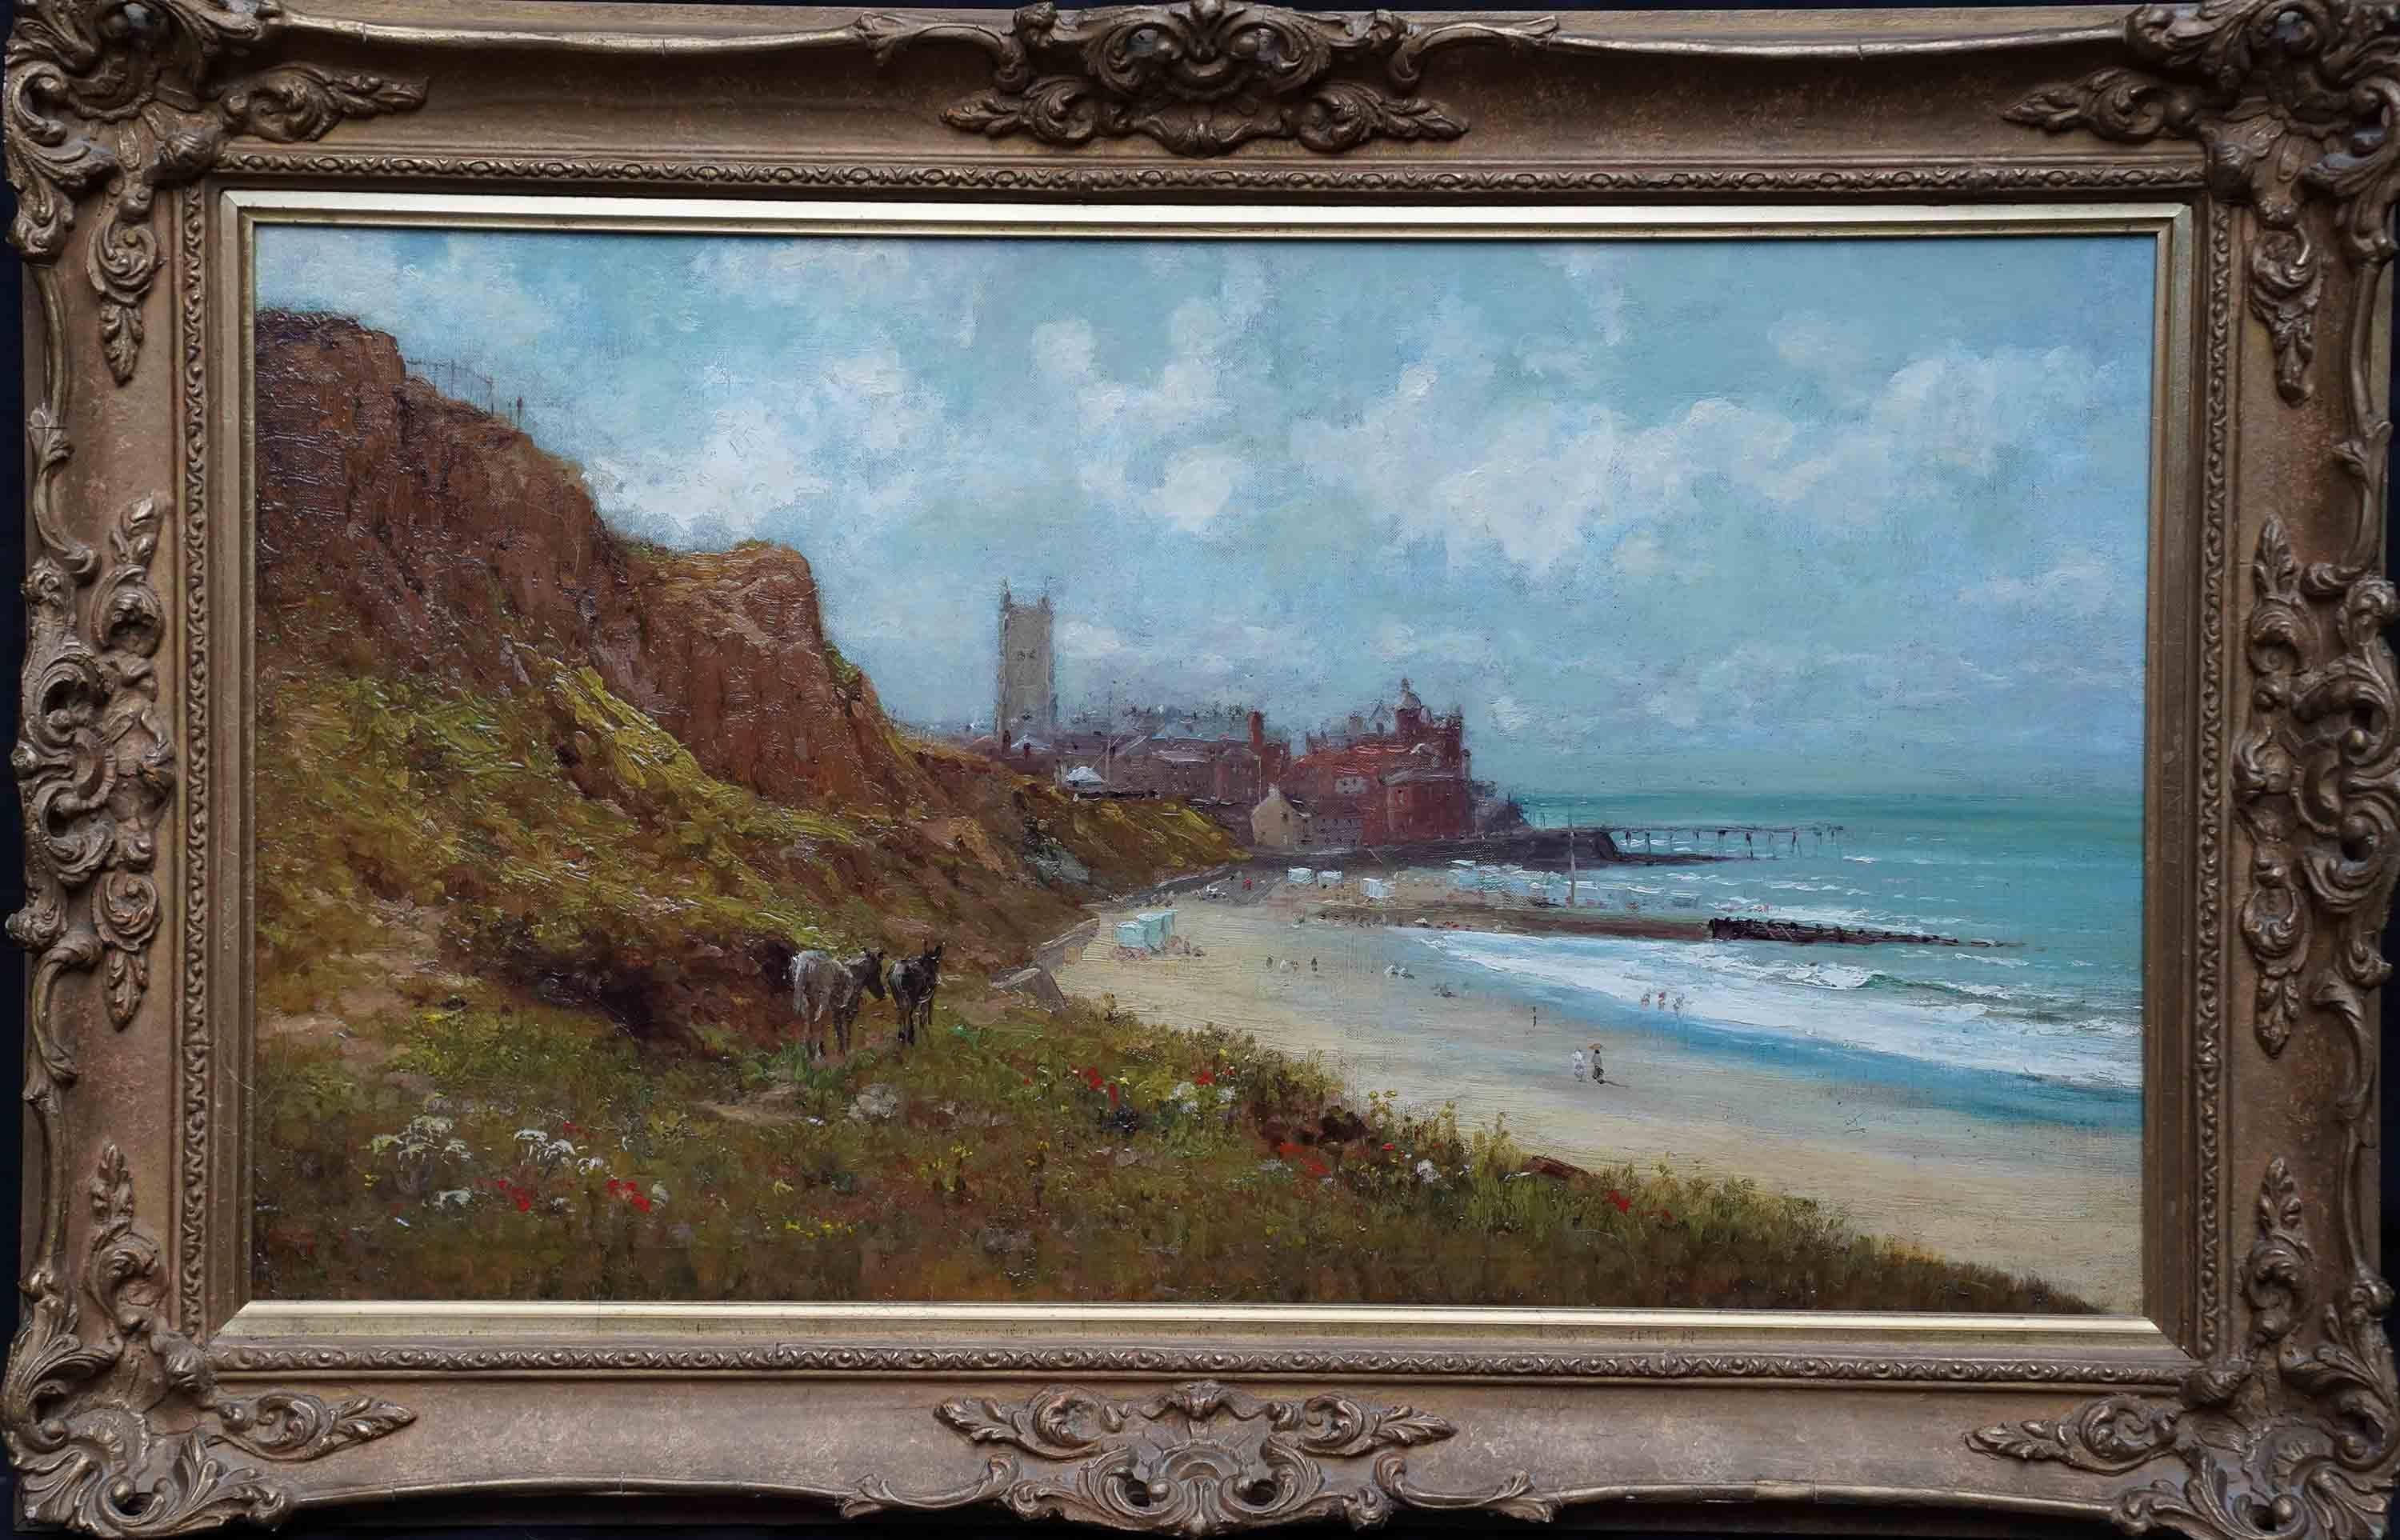 Robert Finlay McIntrye Landscape Painting - Cromer Coastal Landscape with Donkeys - British 19th century art oil painting